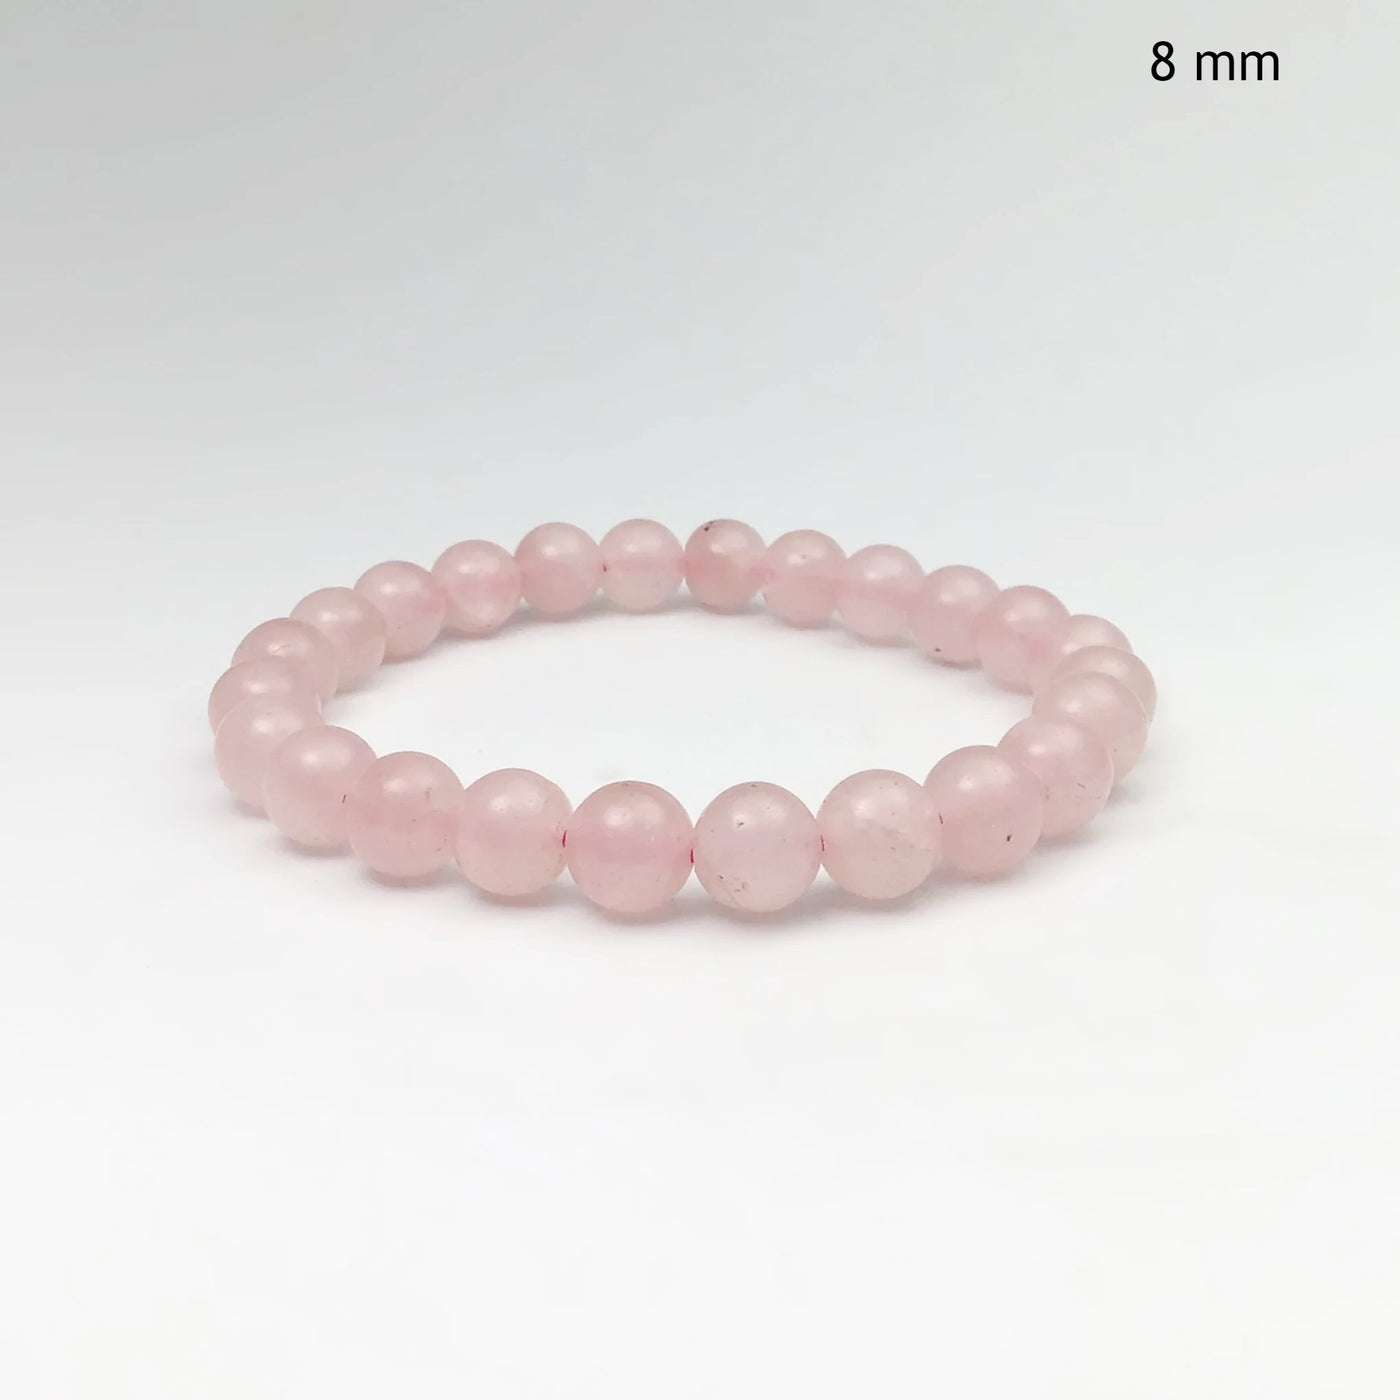 Buy Crystu Natural Certified Rose Quartz Bracelet Diamond Cut Beads 8mm Crystal  Stone Bracelet for Reiki Healing and Crystal Healing Stones Color  Pink  at Amazonin